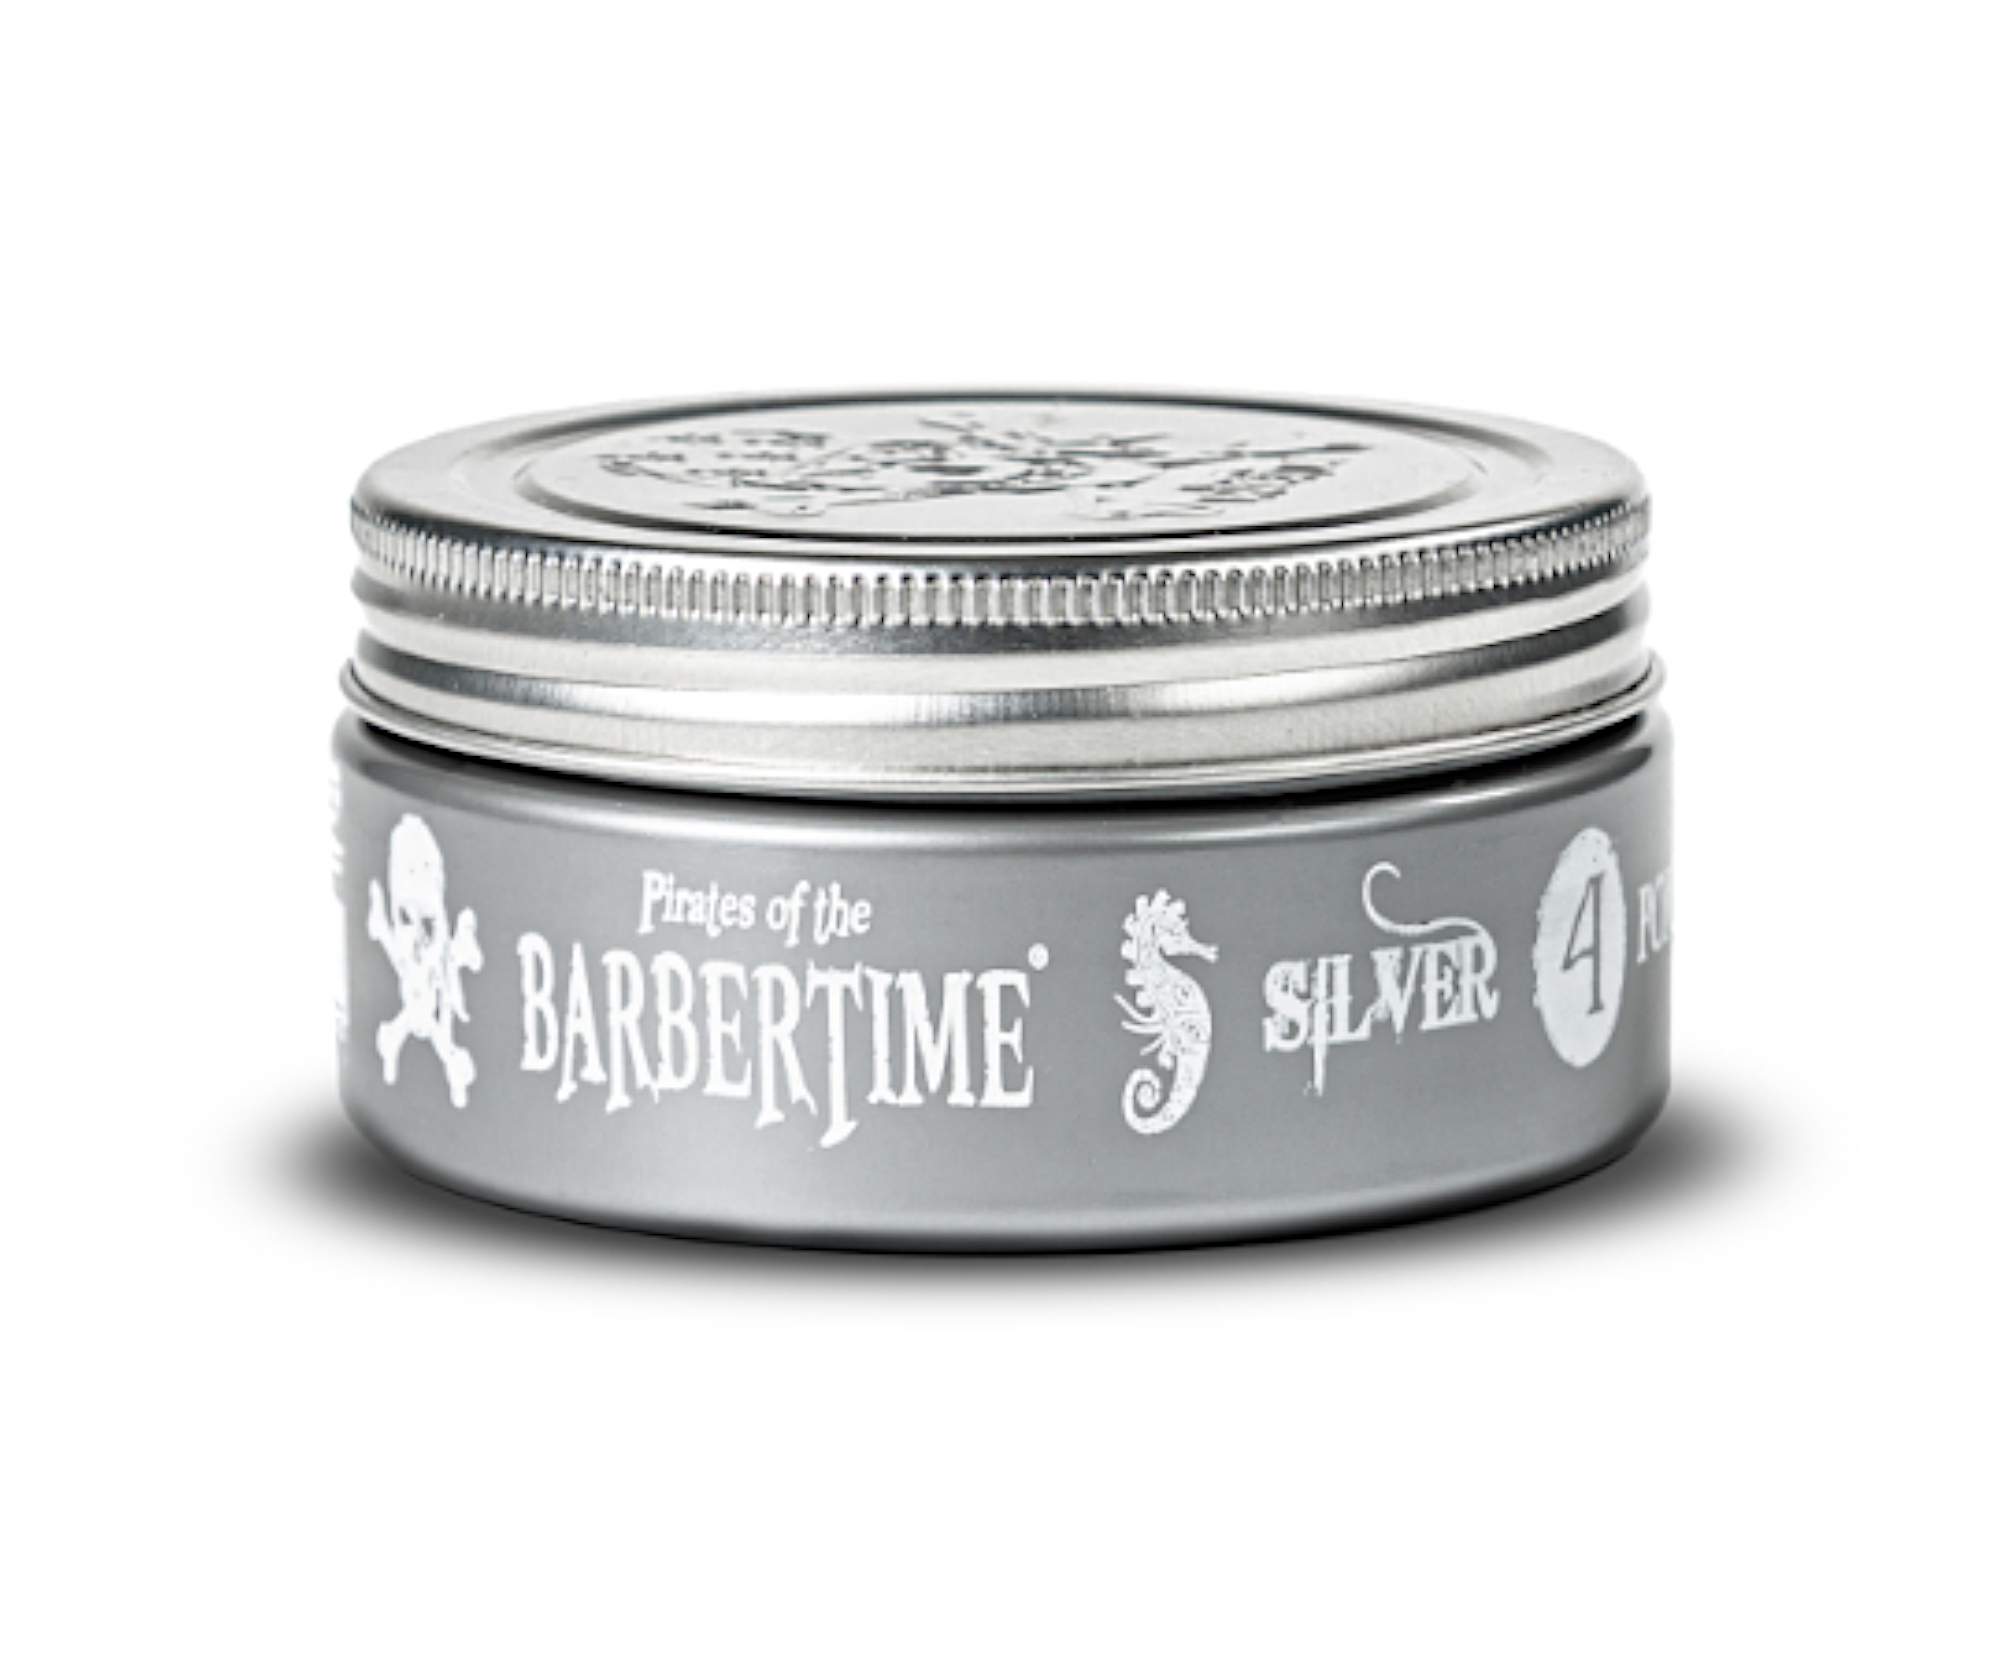 Pomáda na vlasy s velmi silnou fixací a leskem Barbertime Silver Pomade No. 4 - 150 ml - Pirates of the Barbertime + dárek zdarma